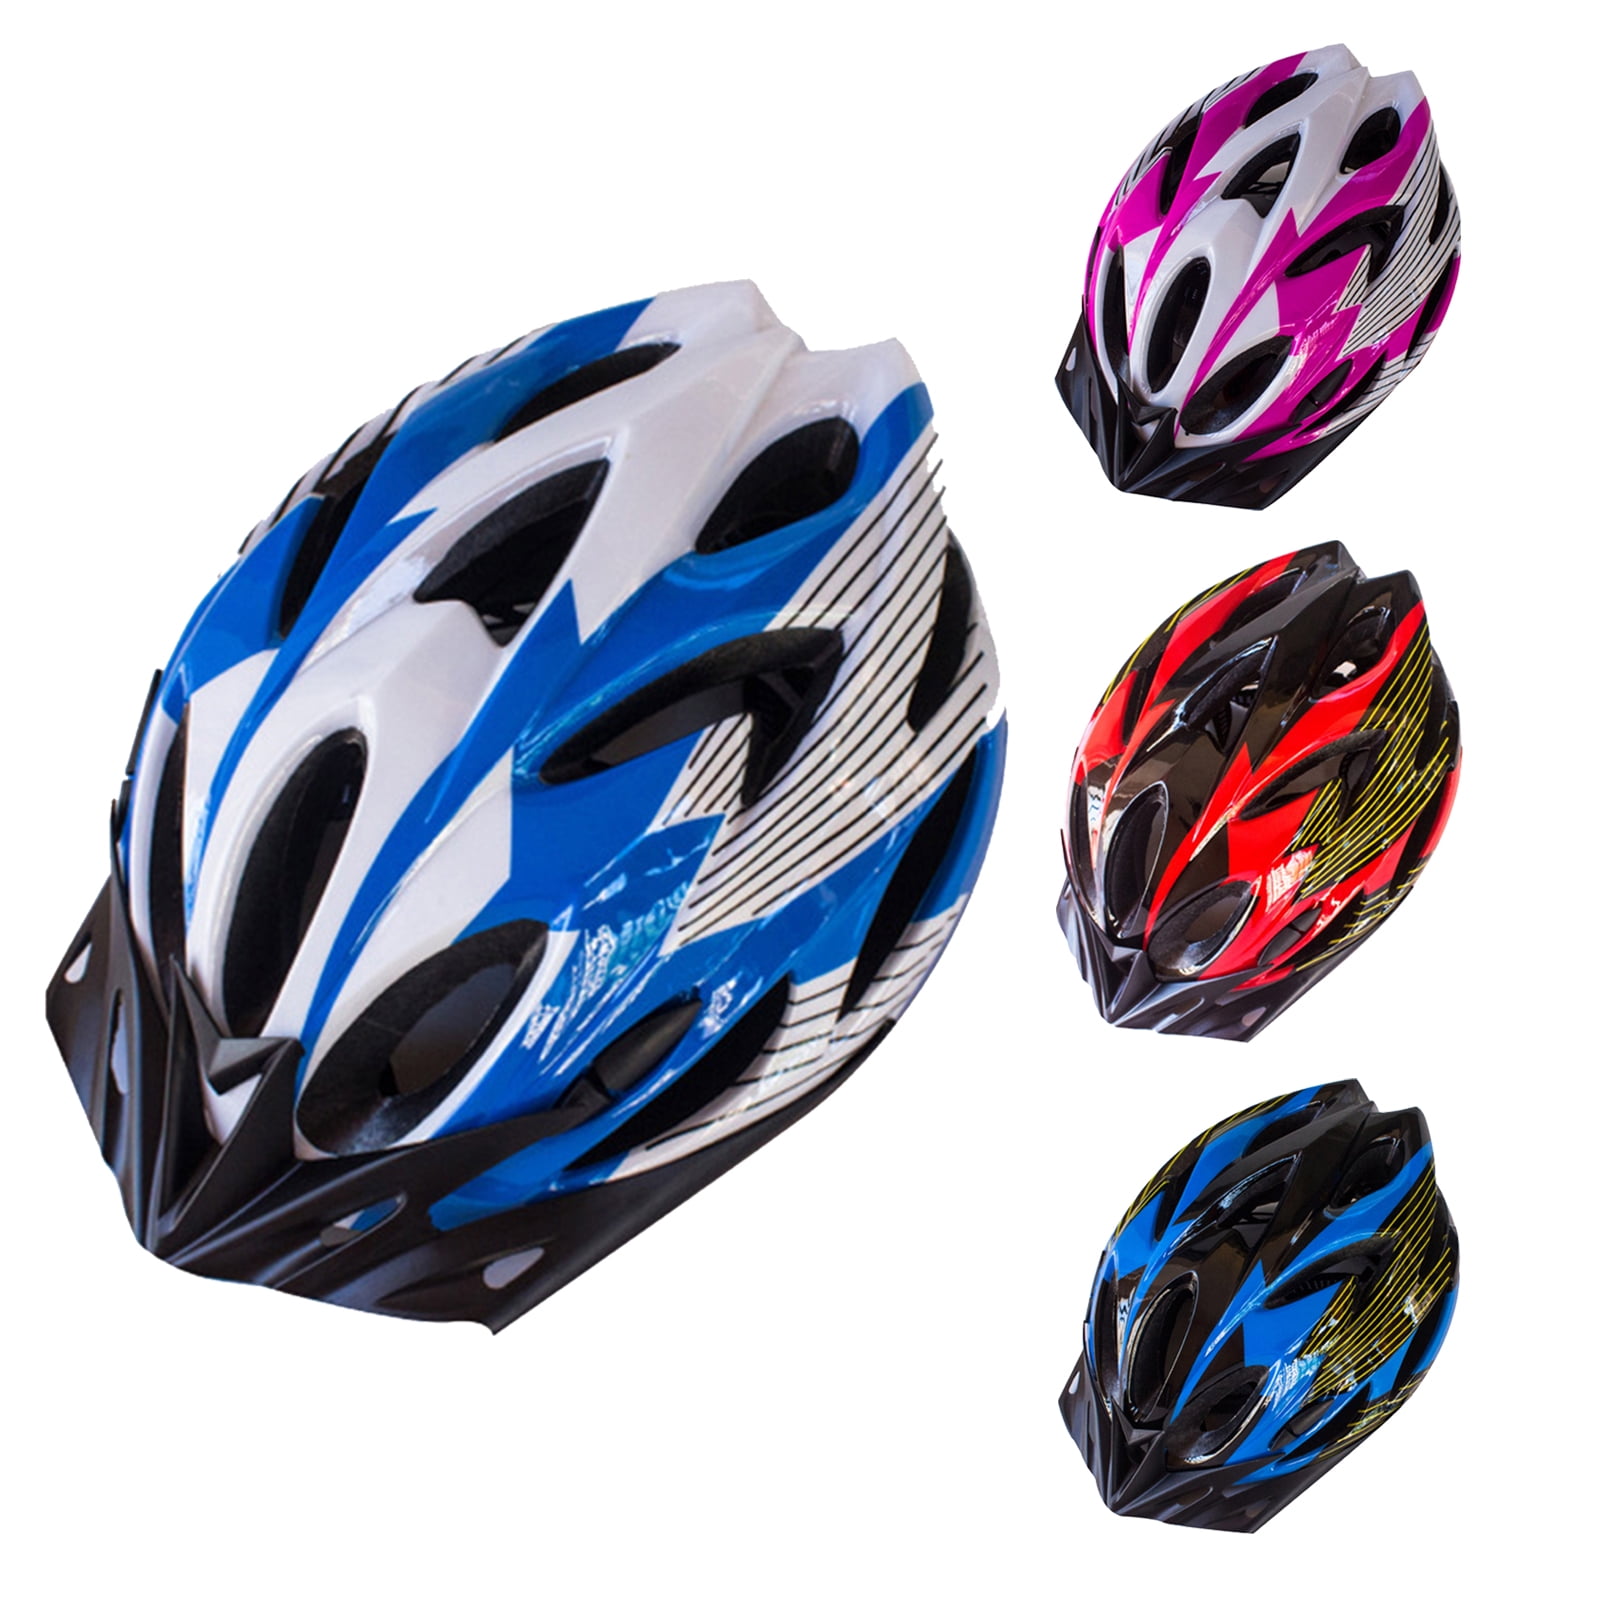 Bicycle Helmets for Adult Men Women Mountain Bike Helmet Adjustable Cycling Bicycle Helmet Comfortable Lightweight Breathable Sports Helmet for Scooter Skateboard Hooverboard Cycling Biking 